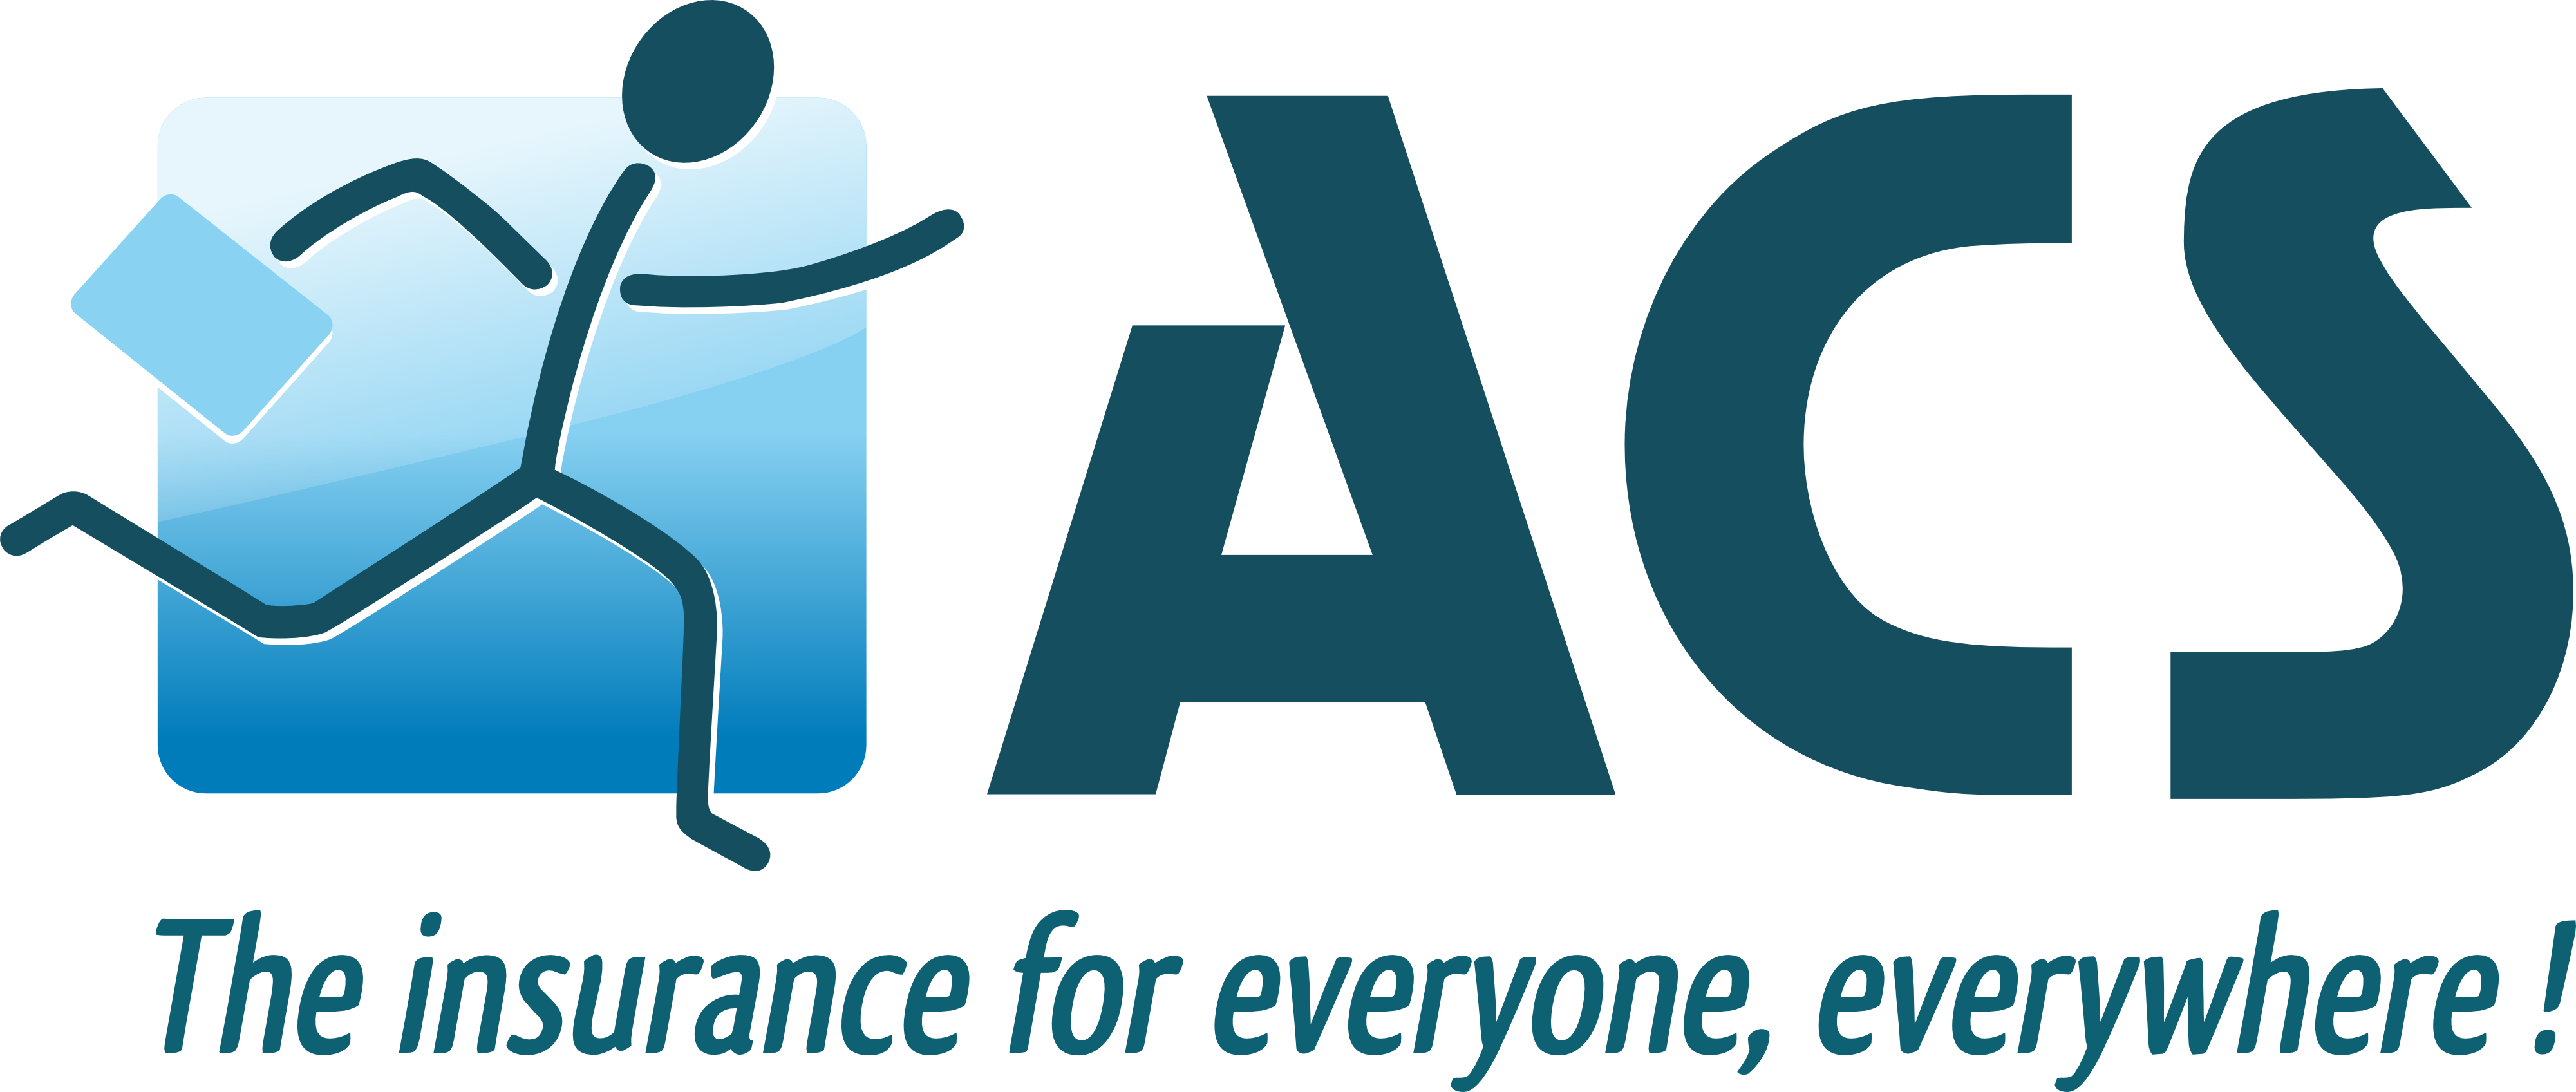 Logo ACS tagline EN - HD